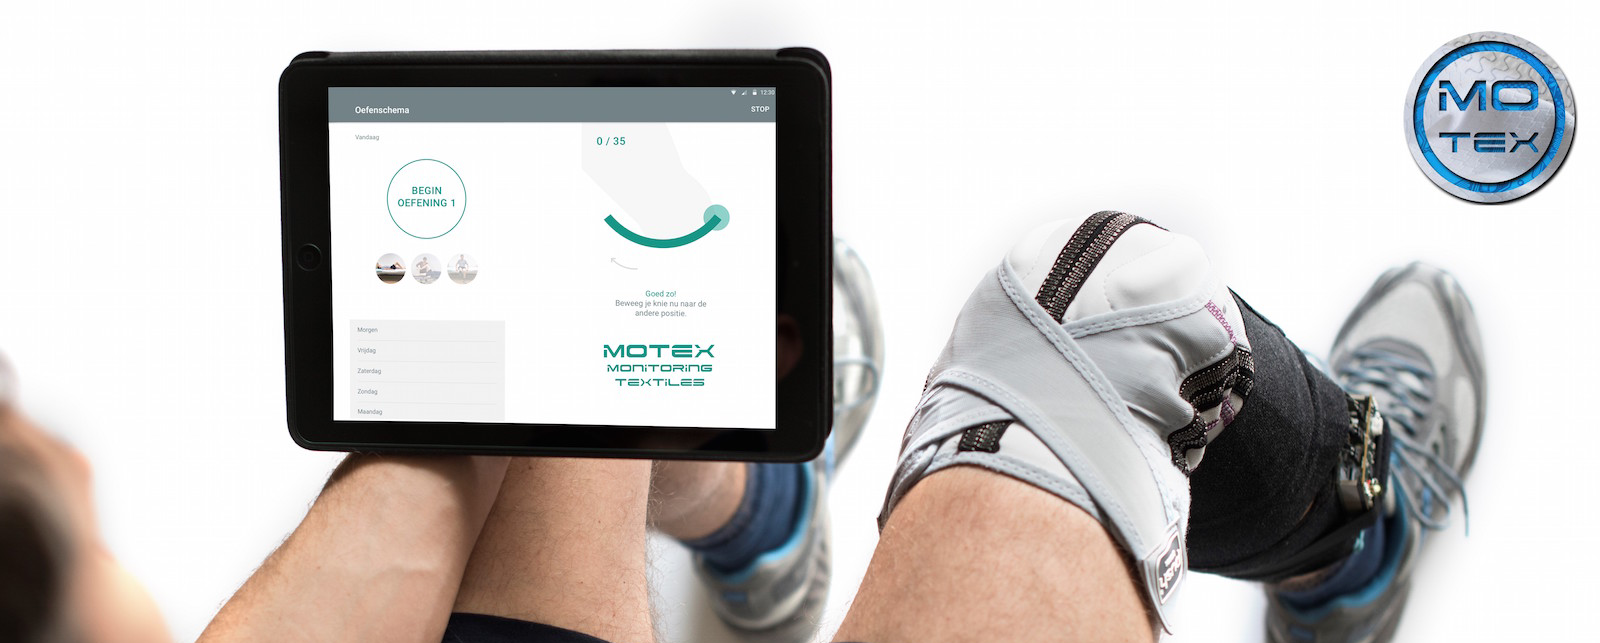 MOTEX-Bandage misst in Echtzeit Kniewinkel